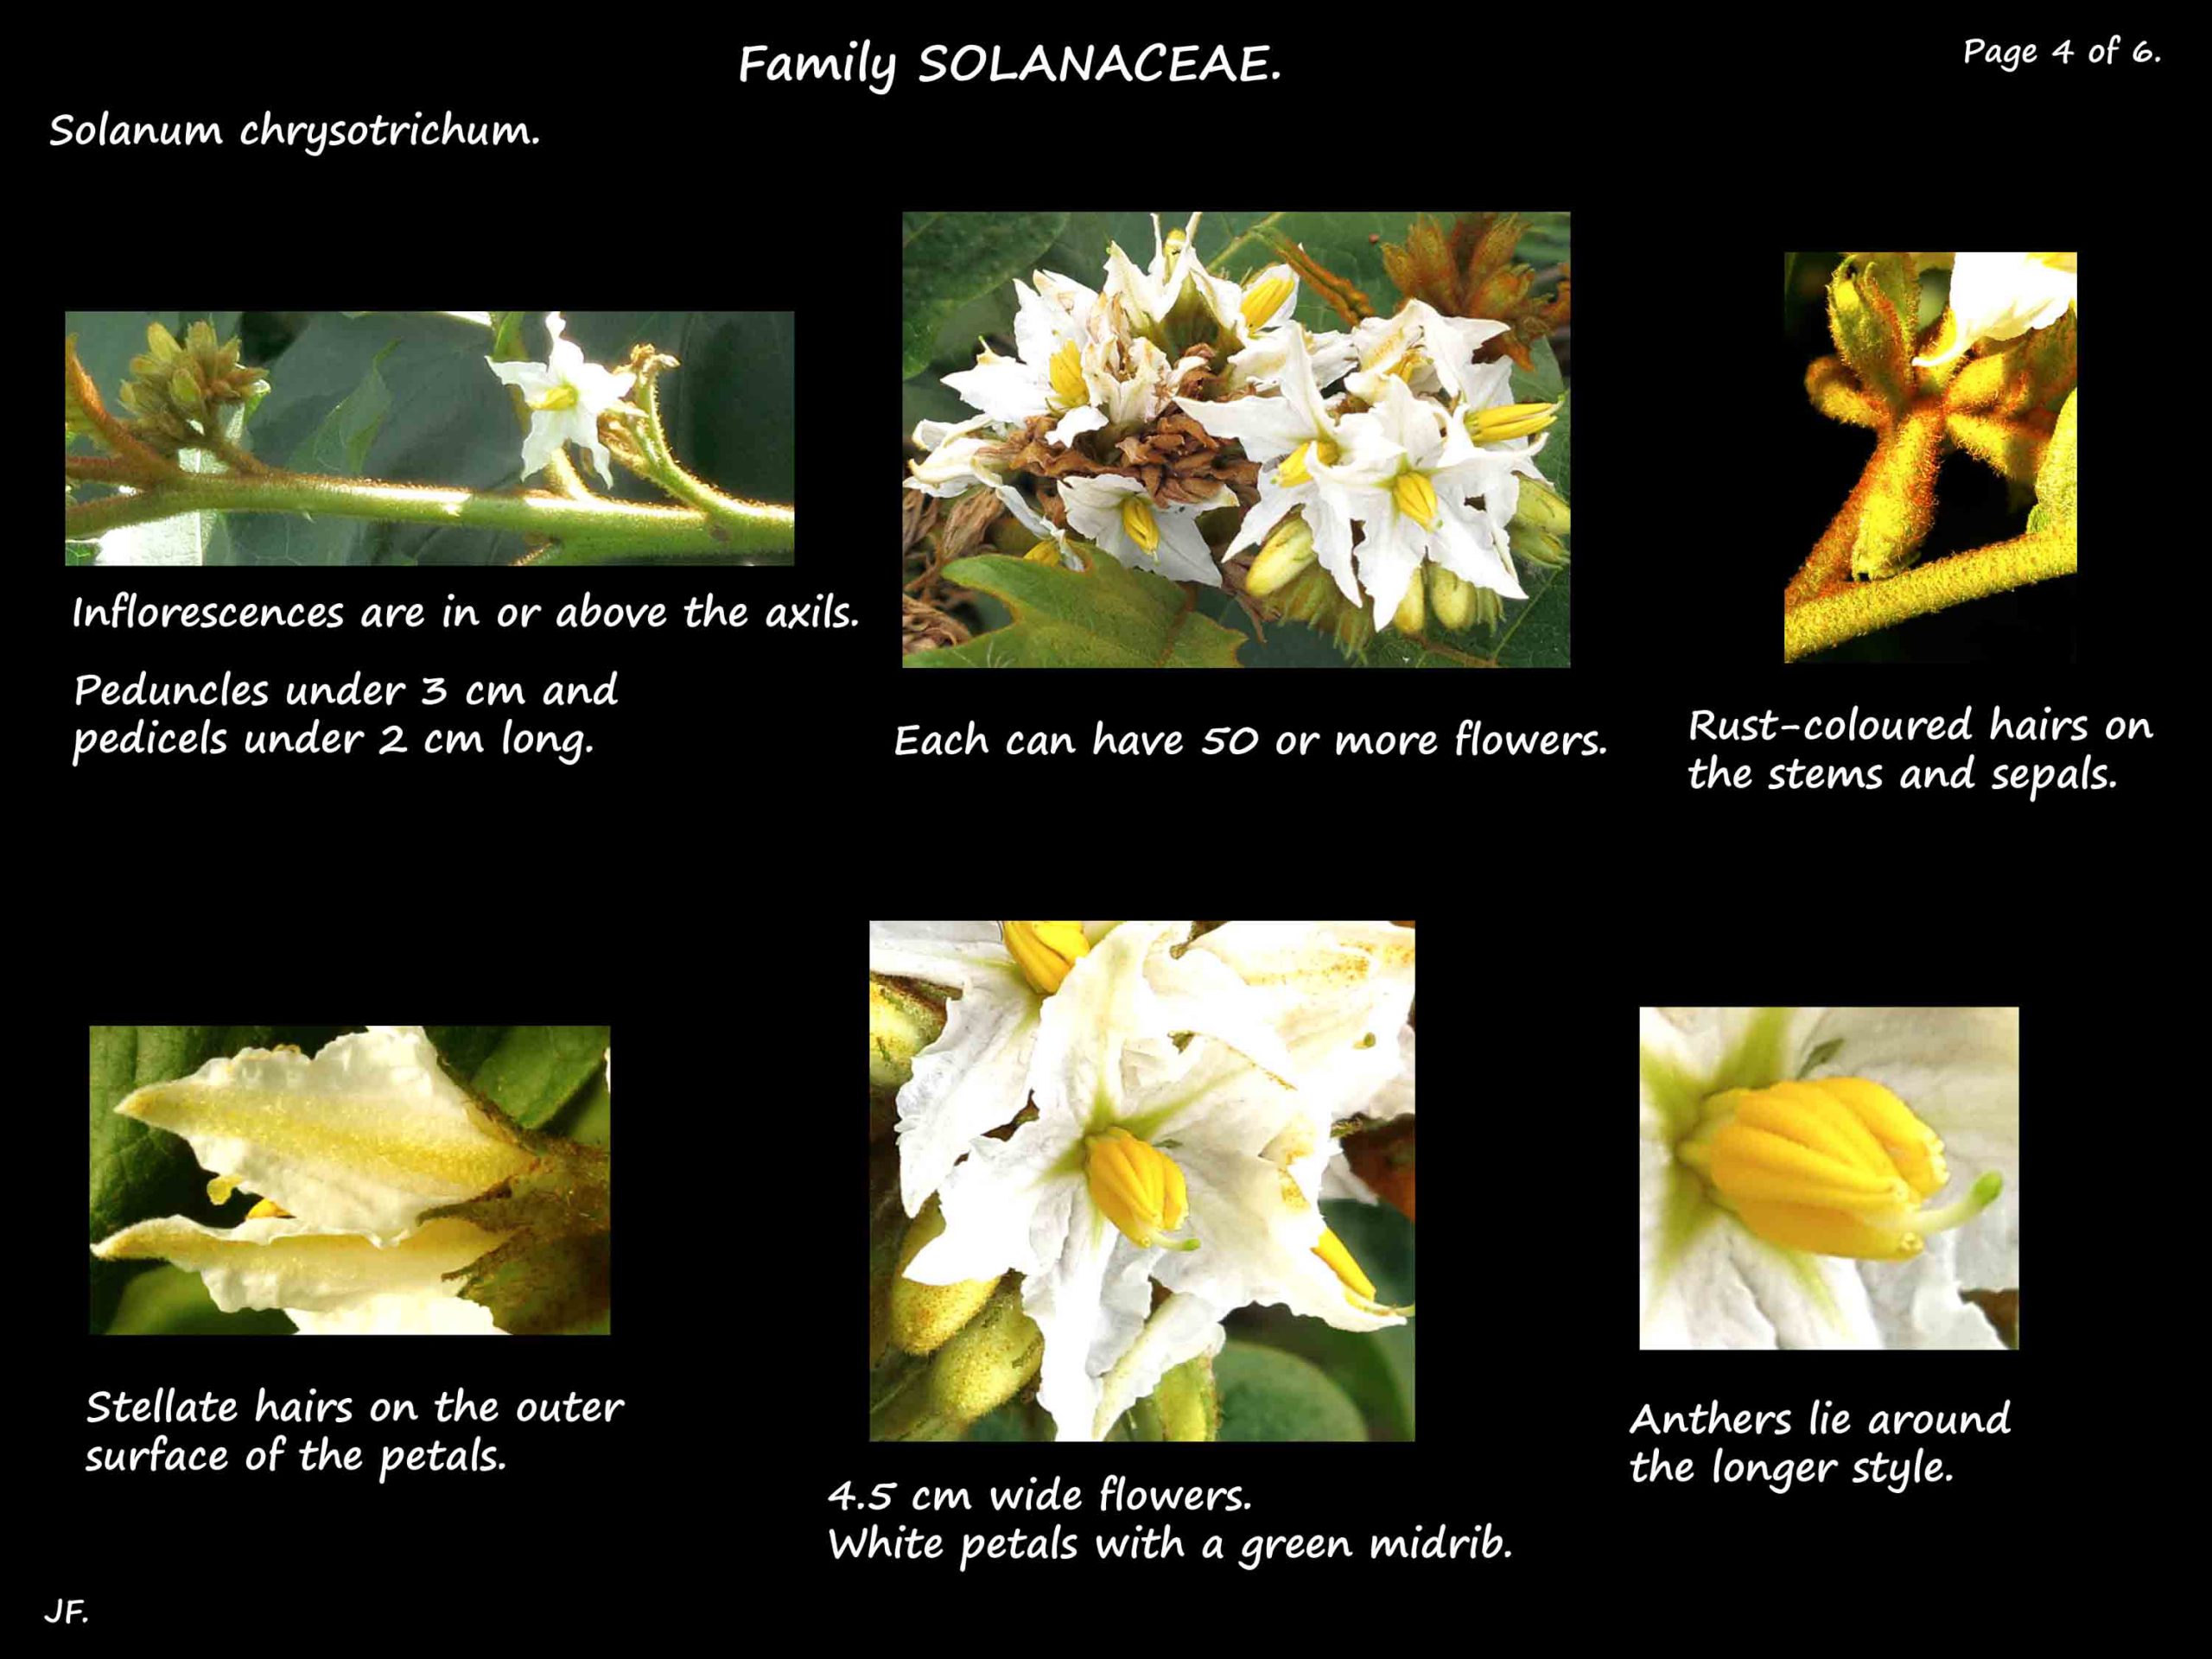 4 Flowers of Solanum chrysotrichum